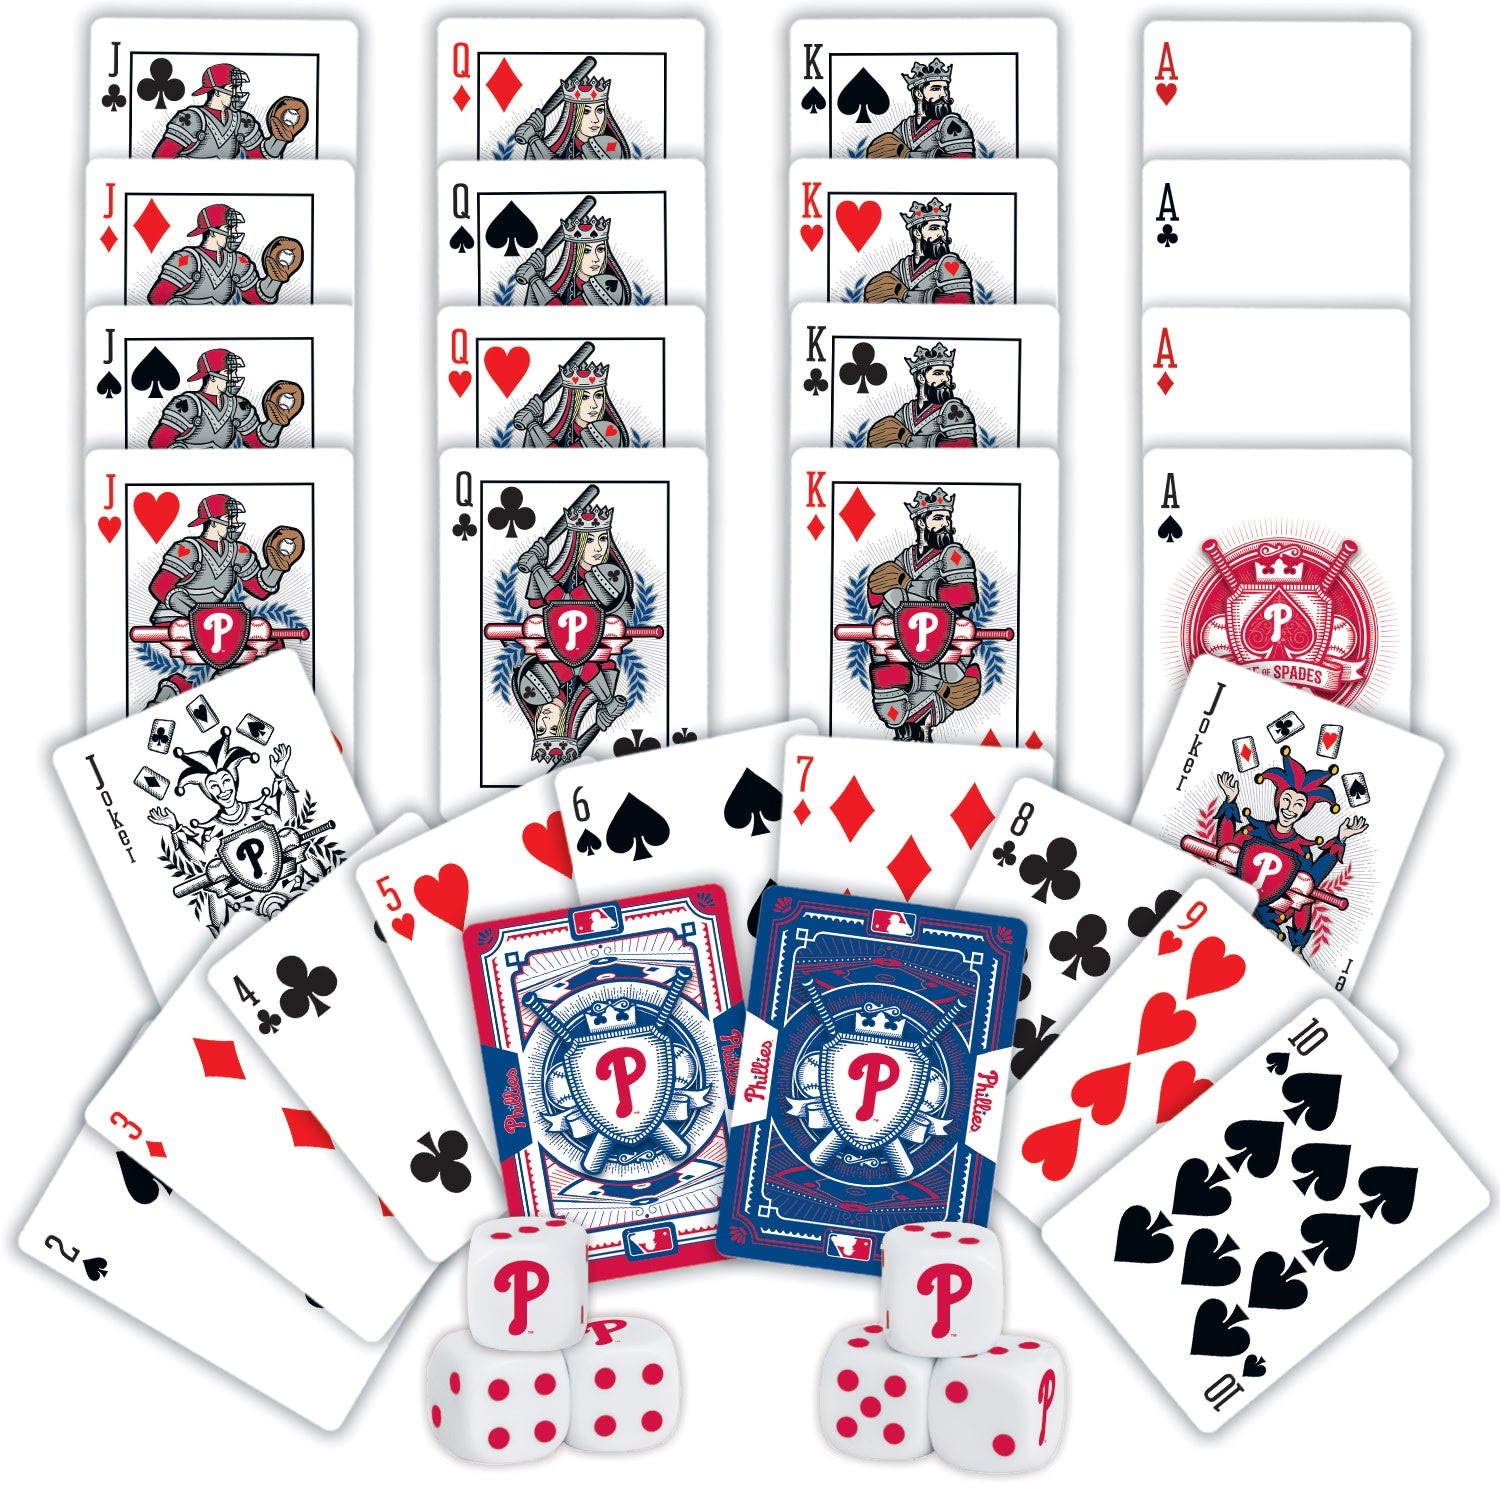 Philadelphia Phillies MLB 2-pack Playing Cards & Dice Set